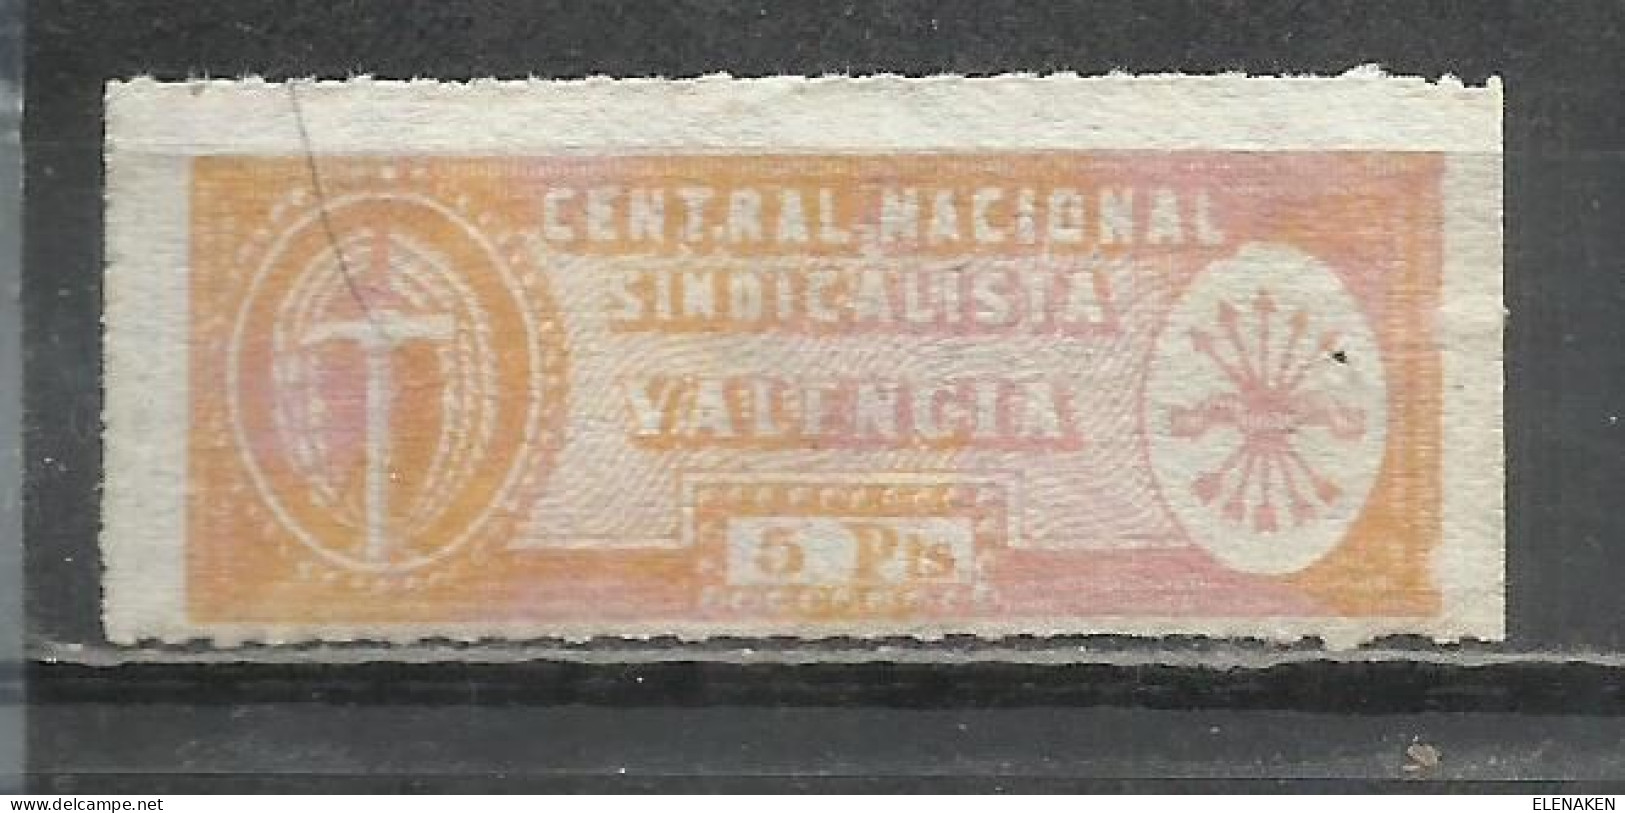 7530D-SELLO FALANGE SINDICATO CNS FALANGE LOCAL VALENCIA.SPAIN CIVIL WAR. - Spanish Civil War Labels